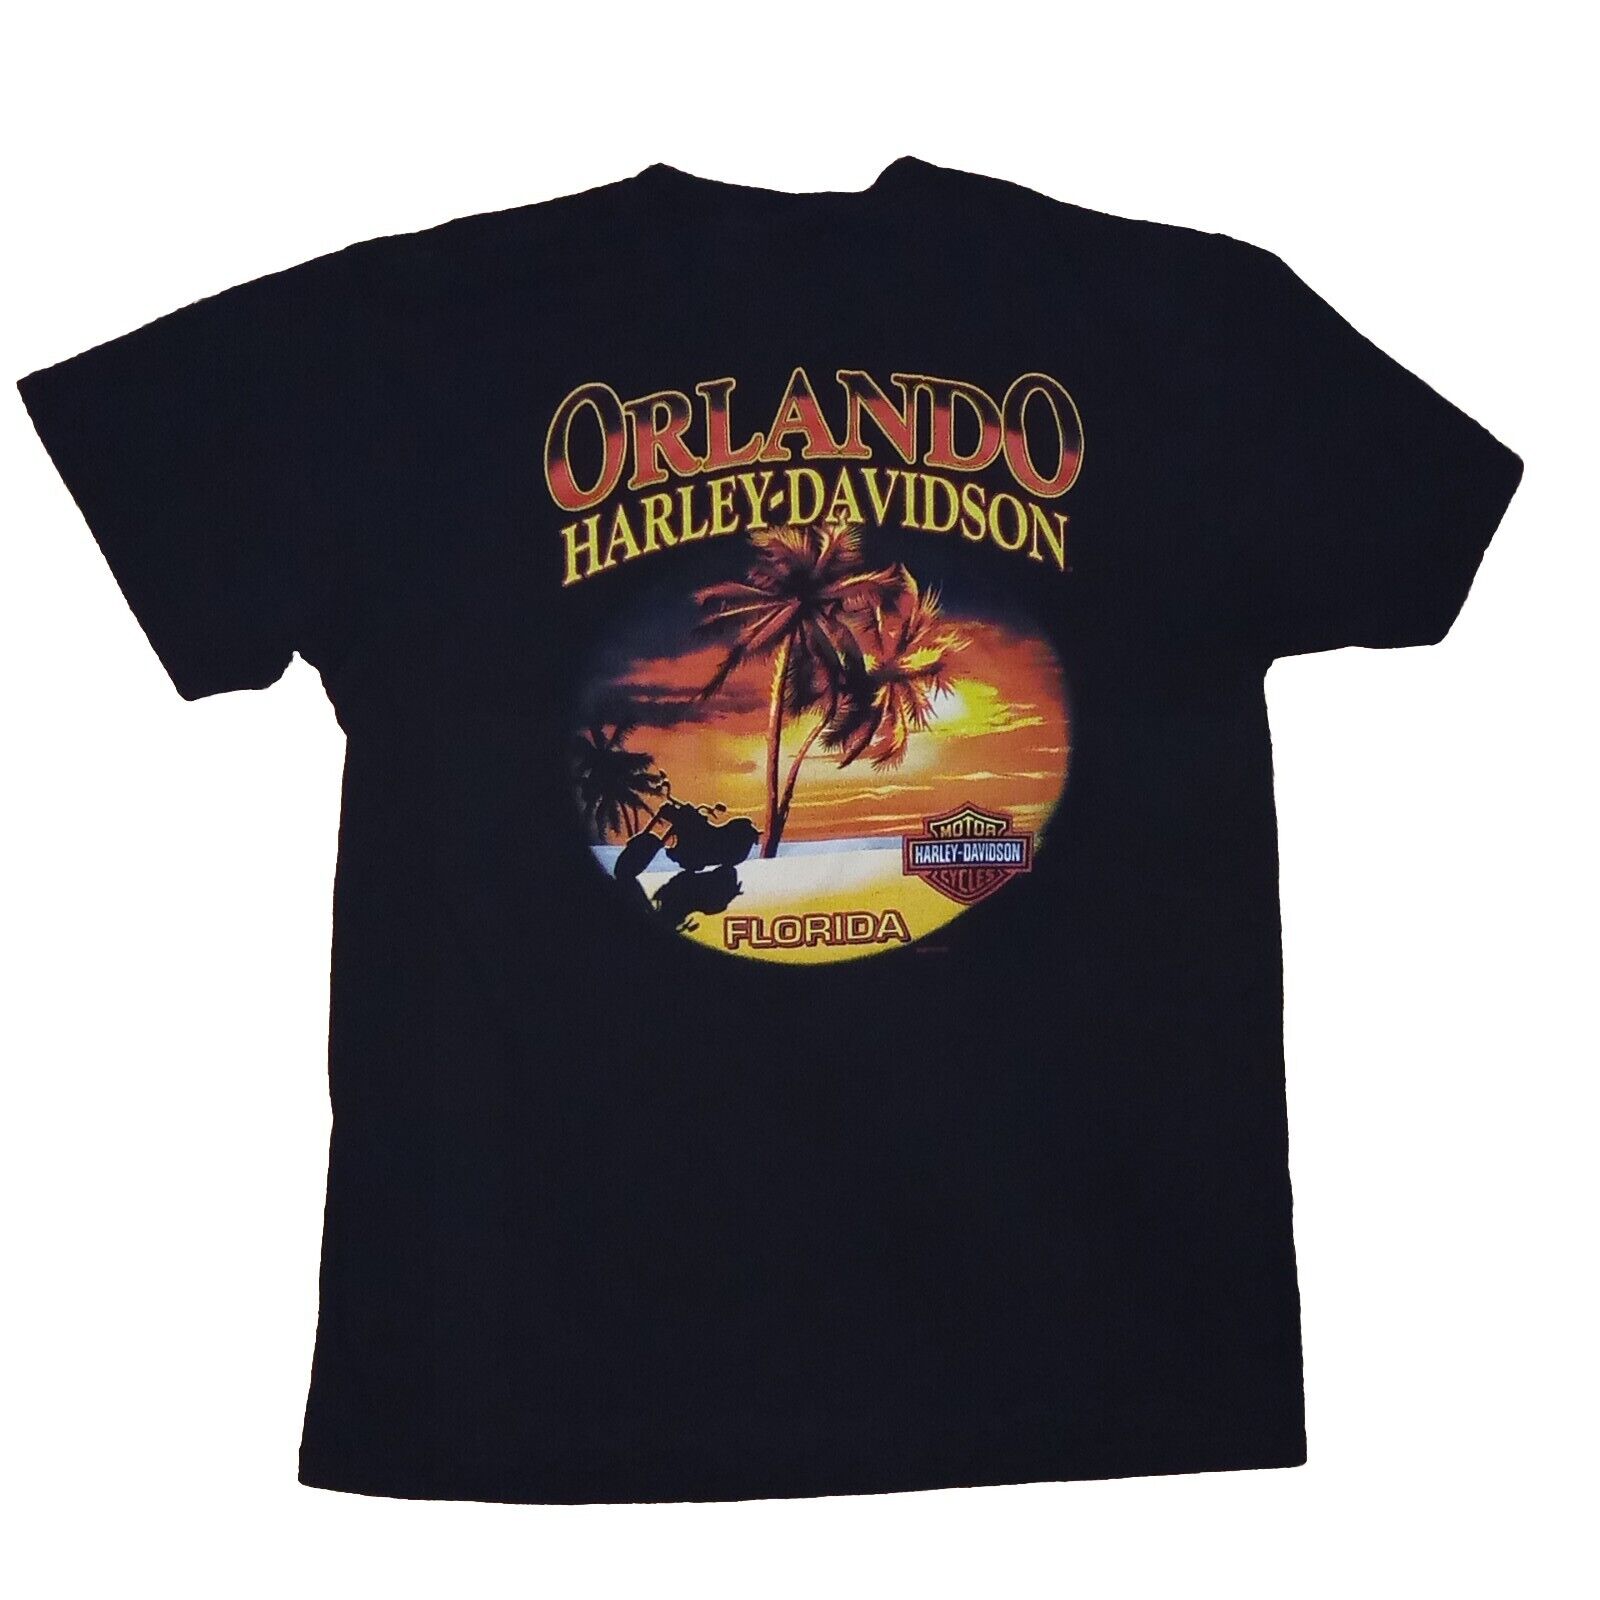 Harley Davidson Shirt Size Large Black Orlando Florida Tee T-Shirt Motorcycle